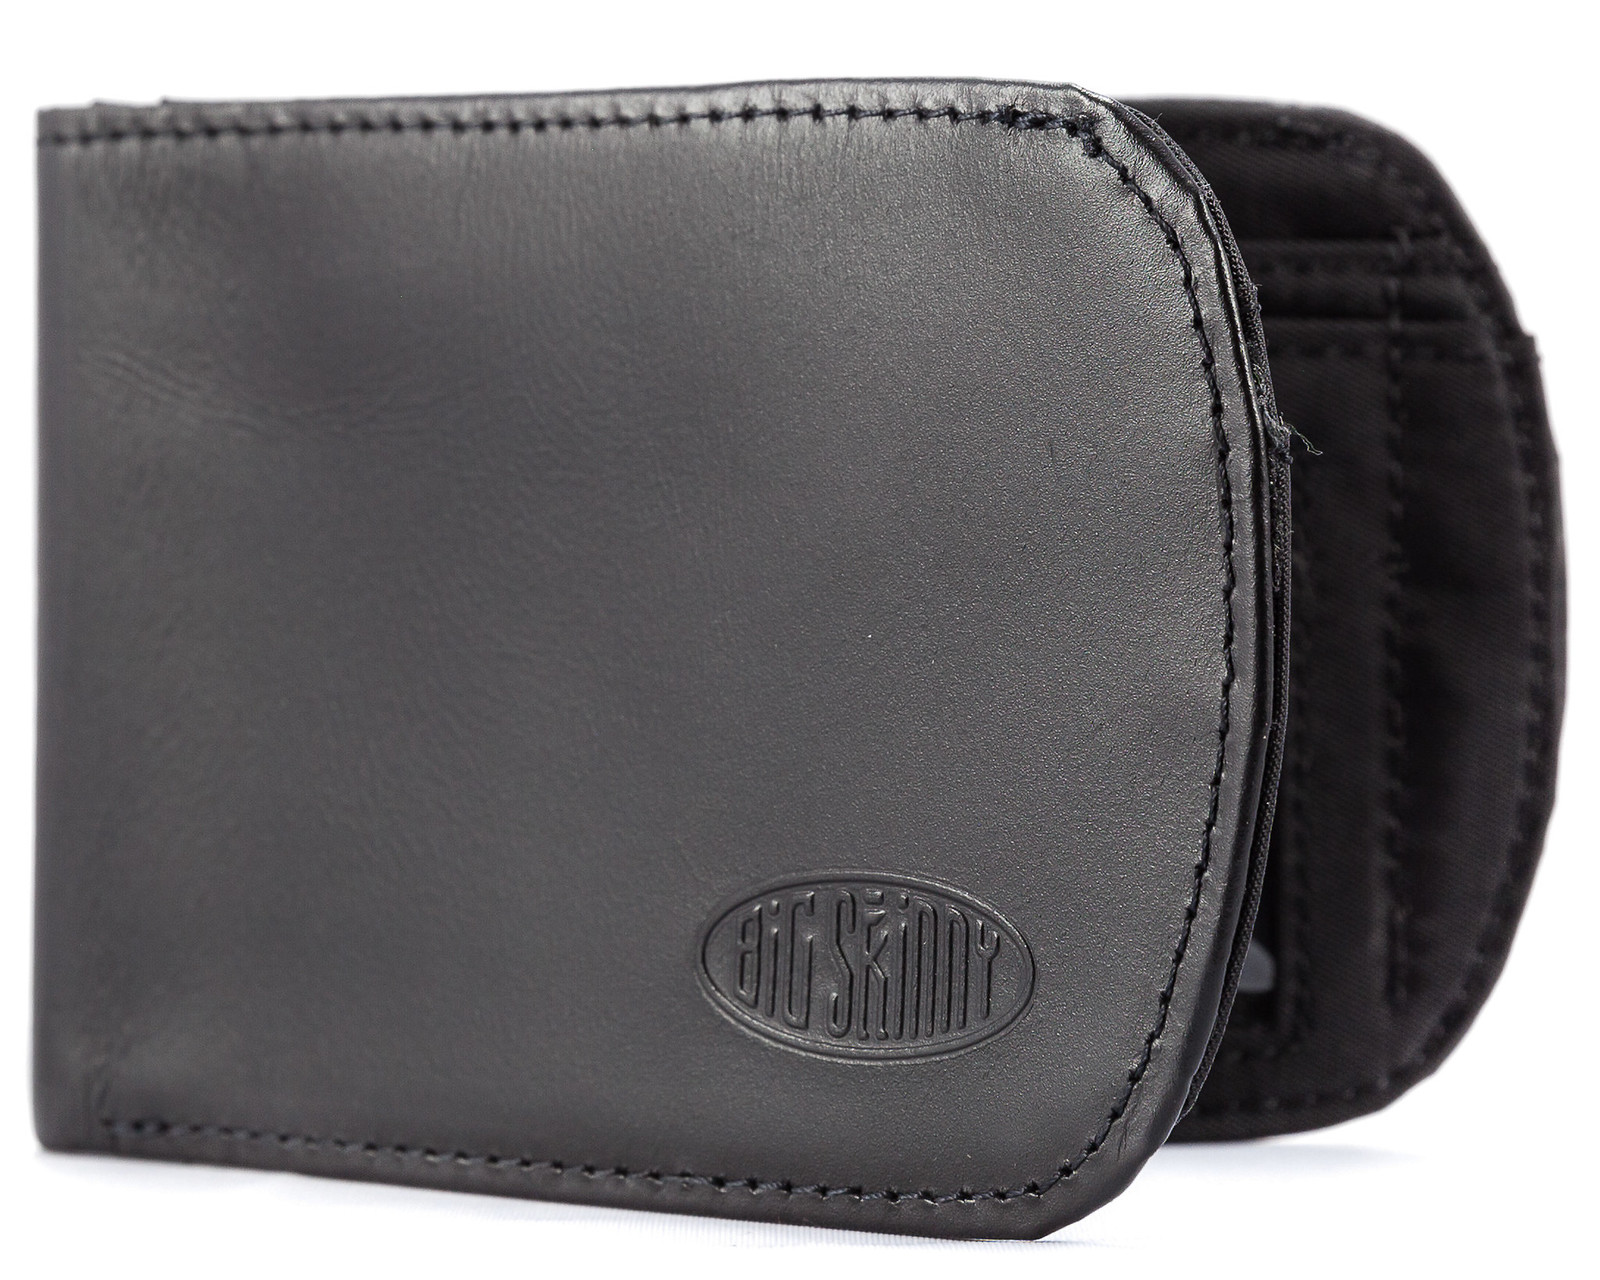 Big Skinny Thin Leather Hybrid RFID Blocking Curve Front Pocket Wallet - image 1 of 4